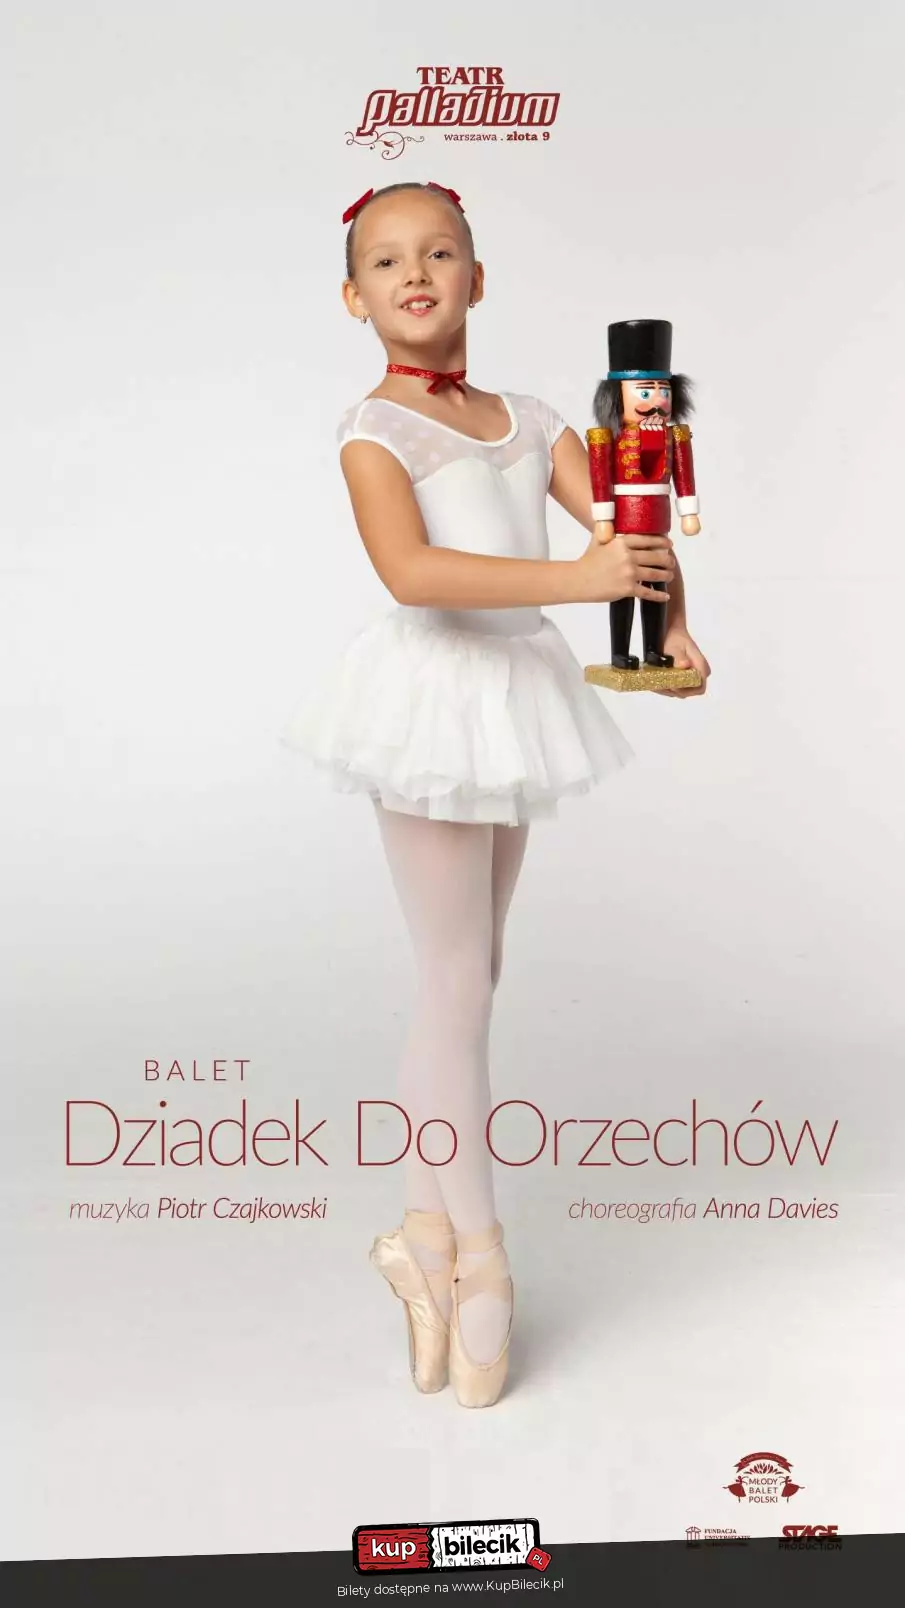 Balet Dziadek do orzechw